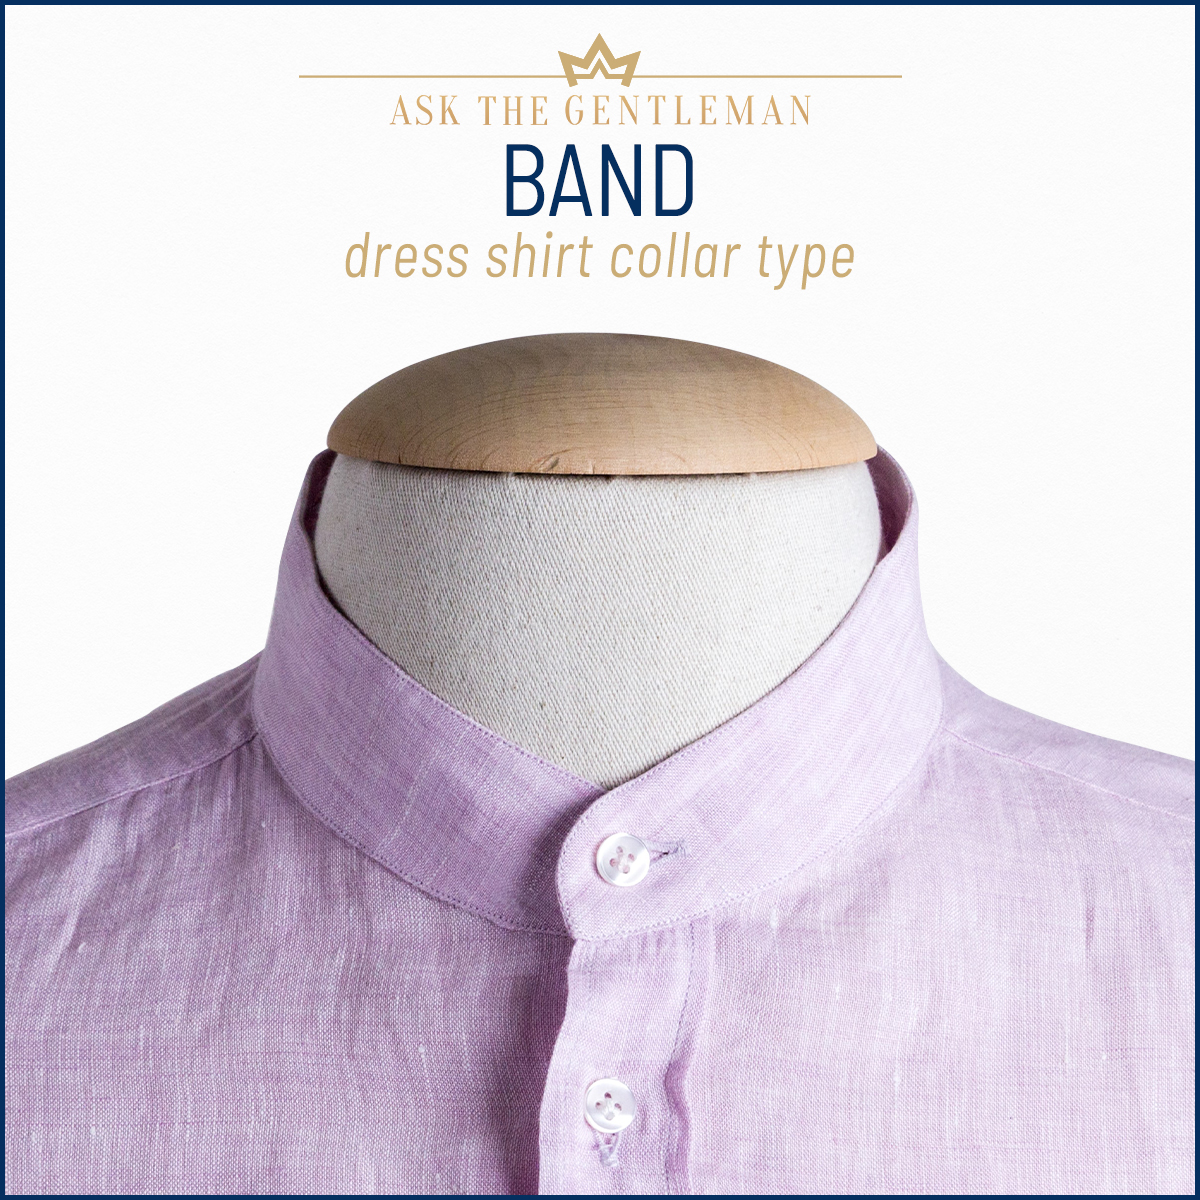 Band dress shirt collar type